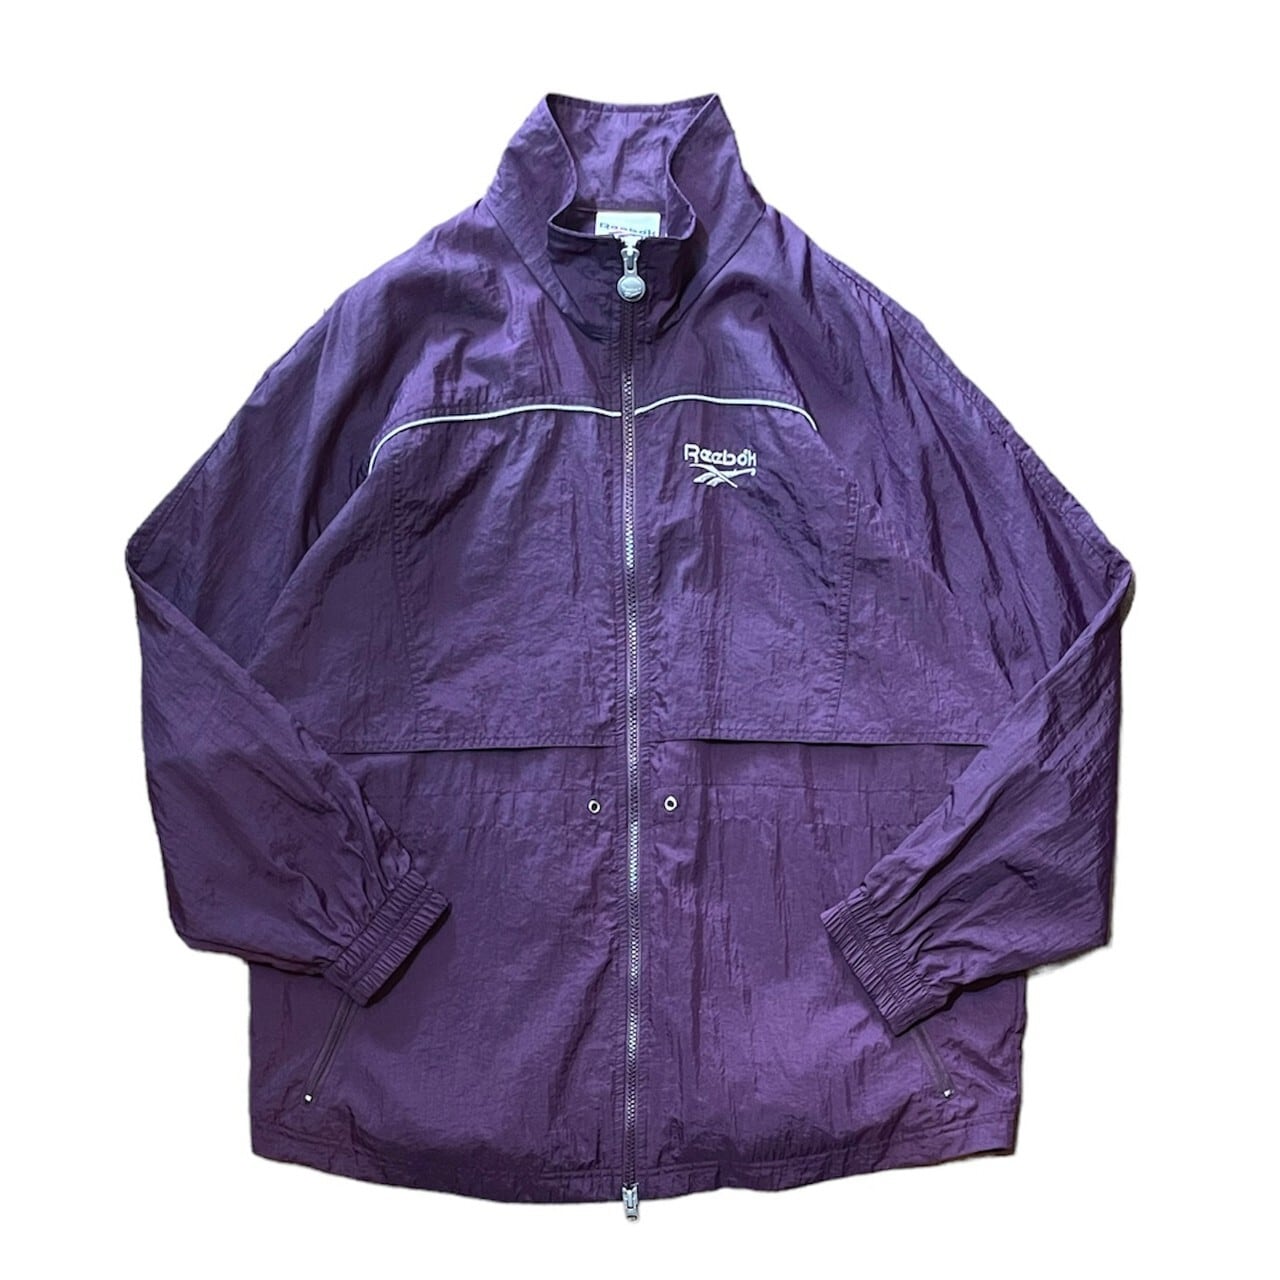 90s Reebok Nylon Jacket | SPROUT ONLINE